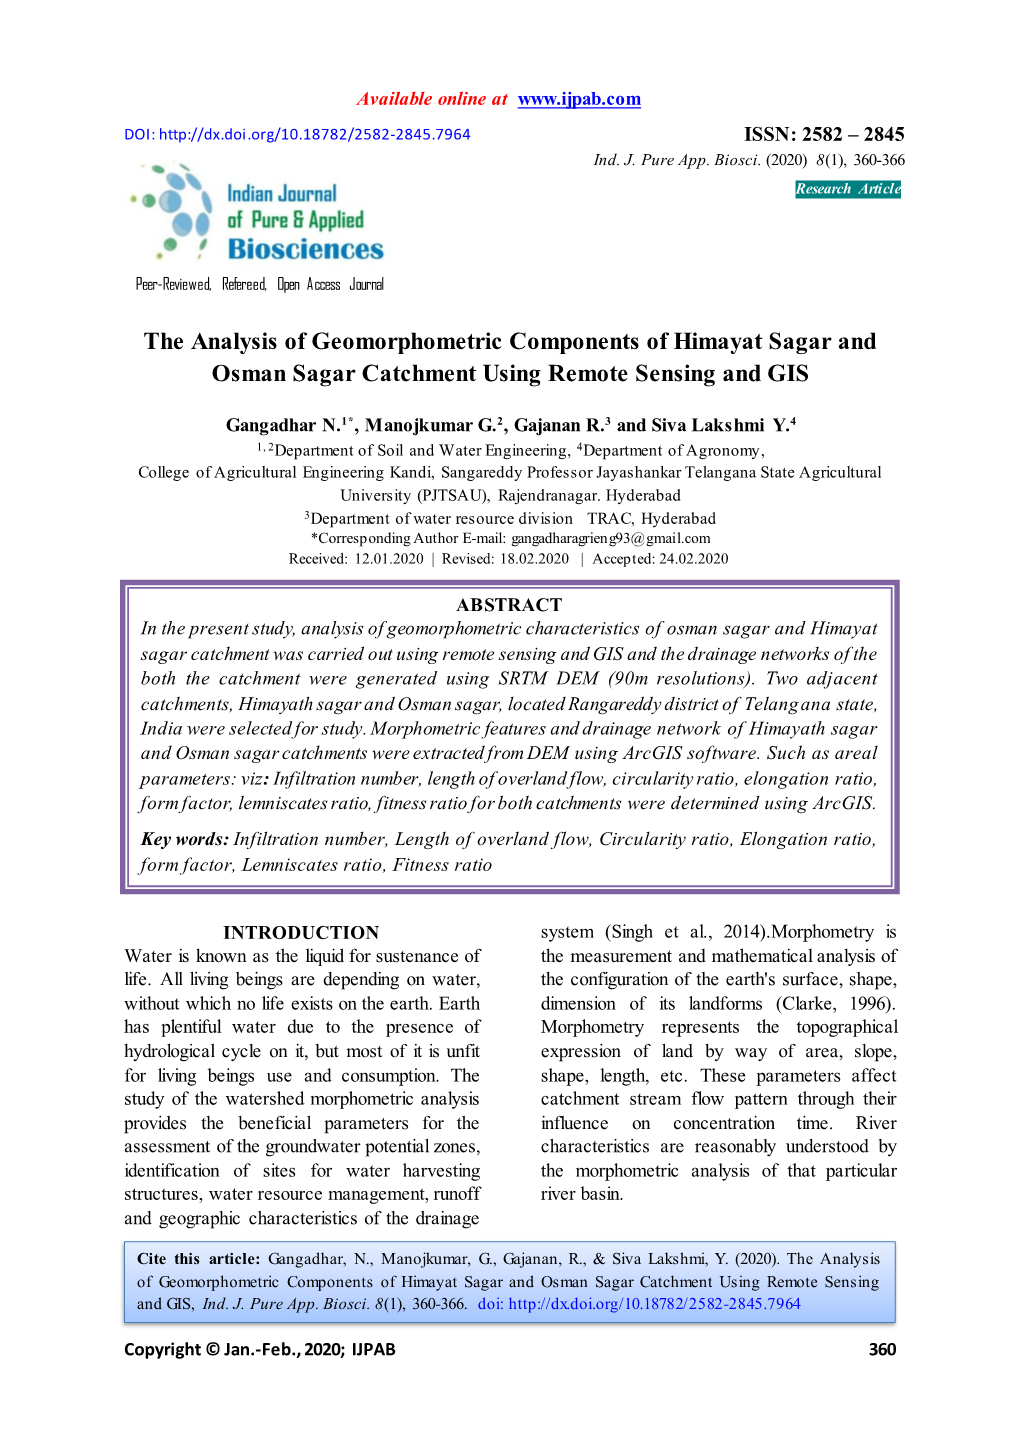 The Analysis of Geomorphometric Components of Himayat Sagar and Osman Sagar Catchment Using Remote Sensing and GIS